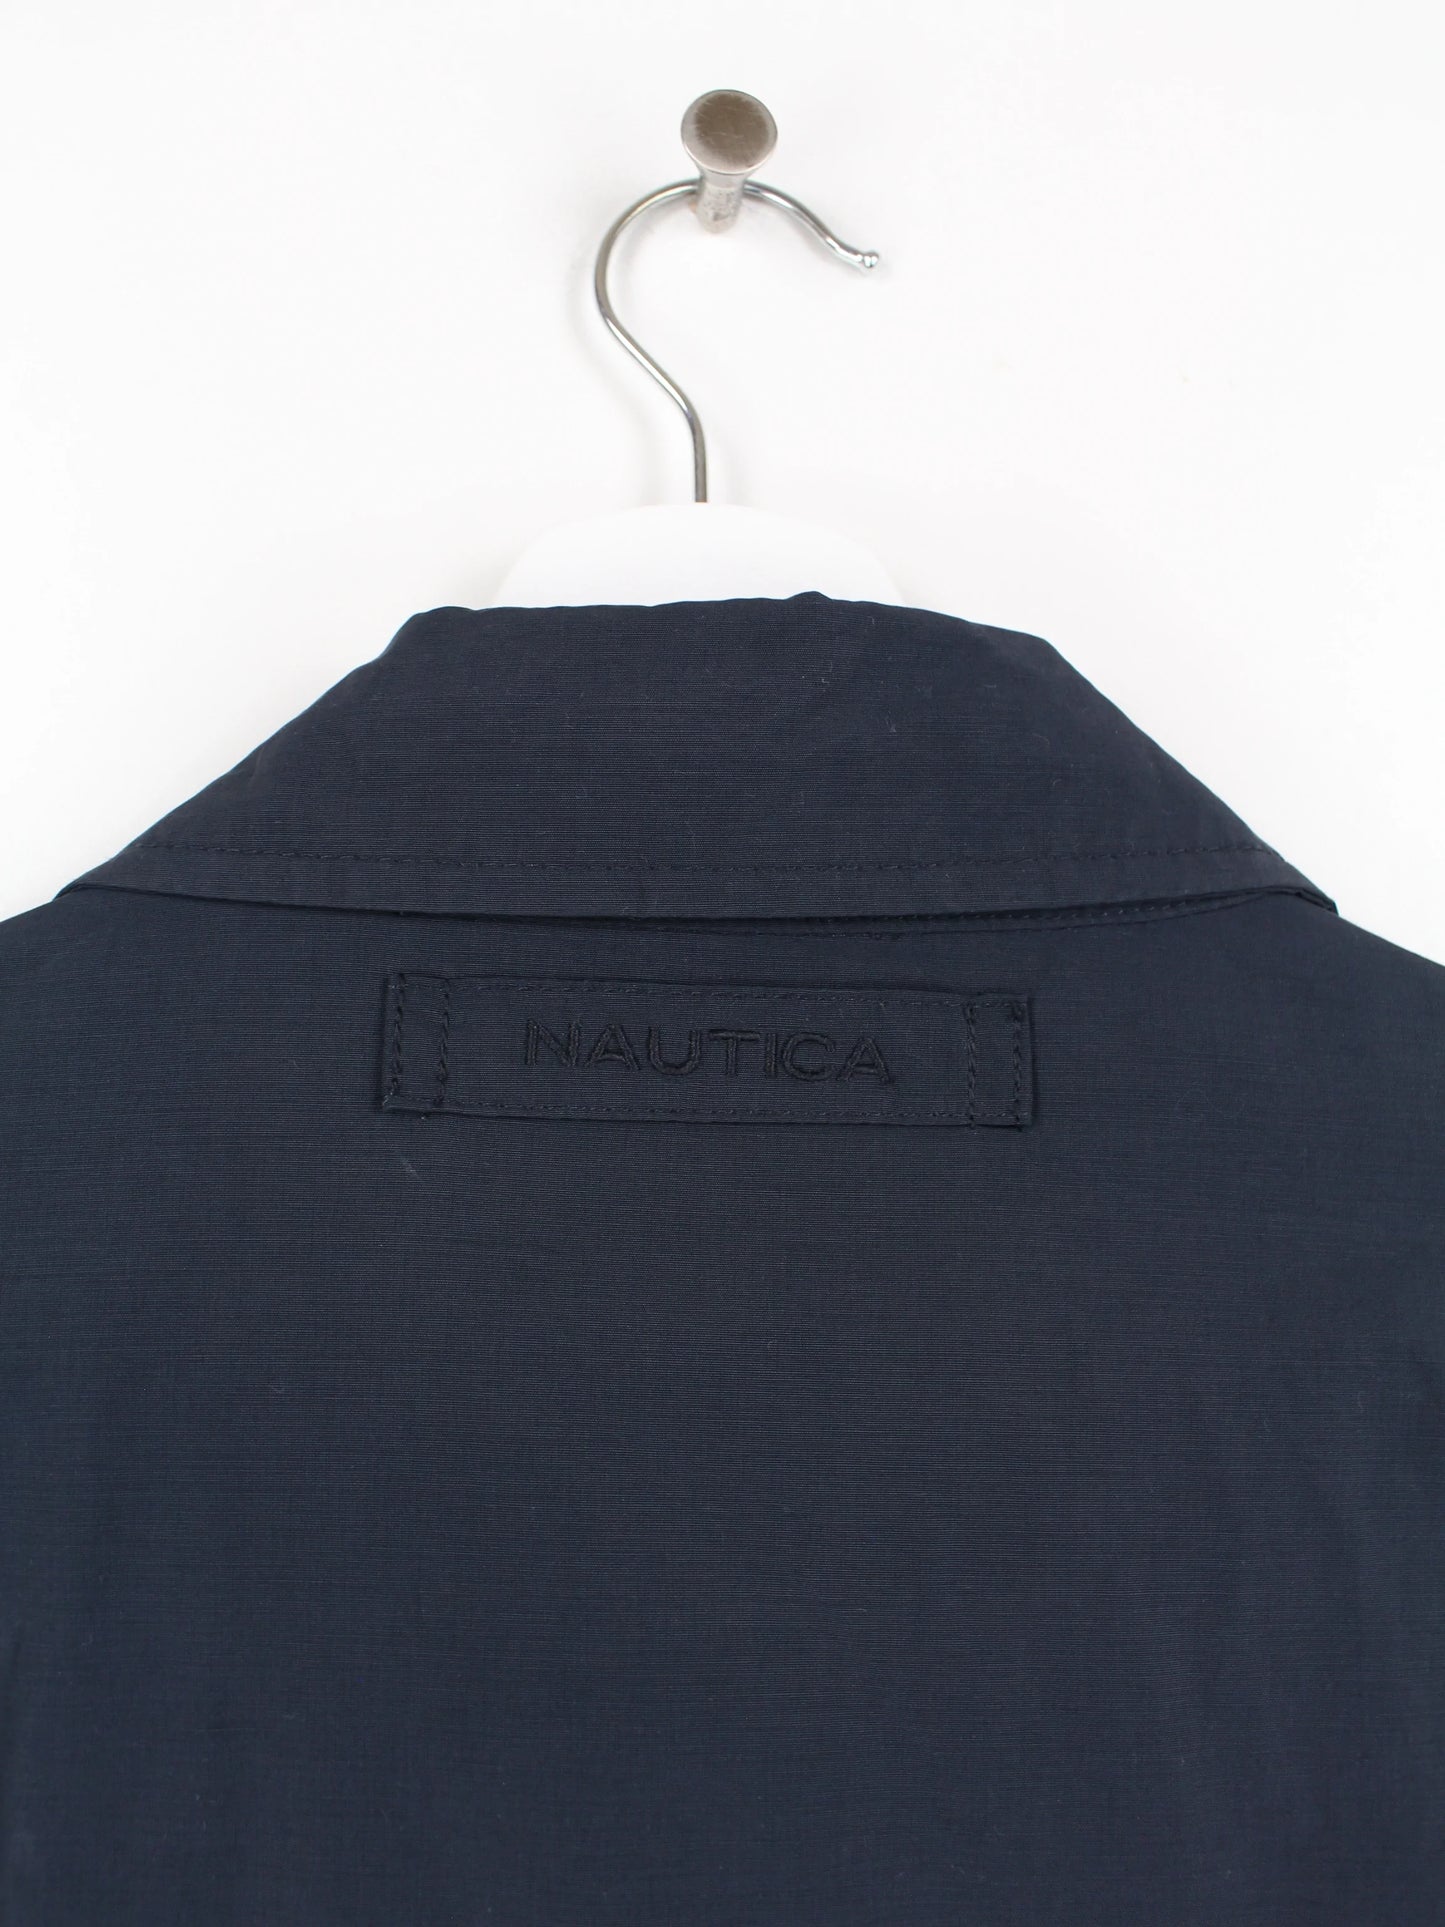 Nautica Harrington Jacke Blau XL